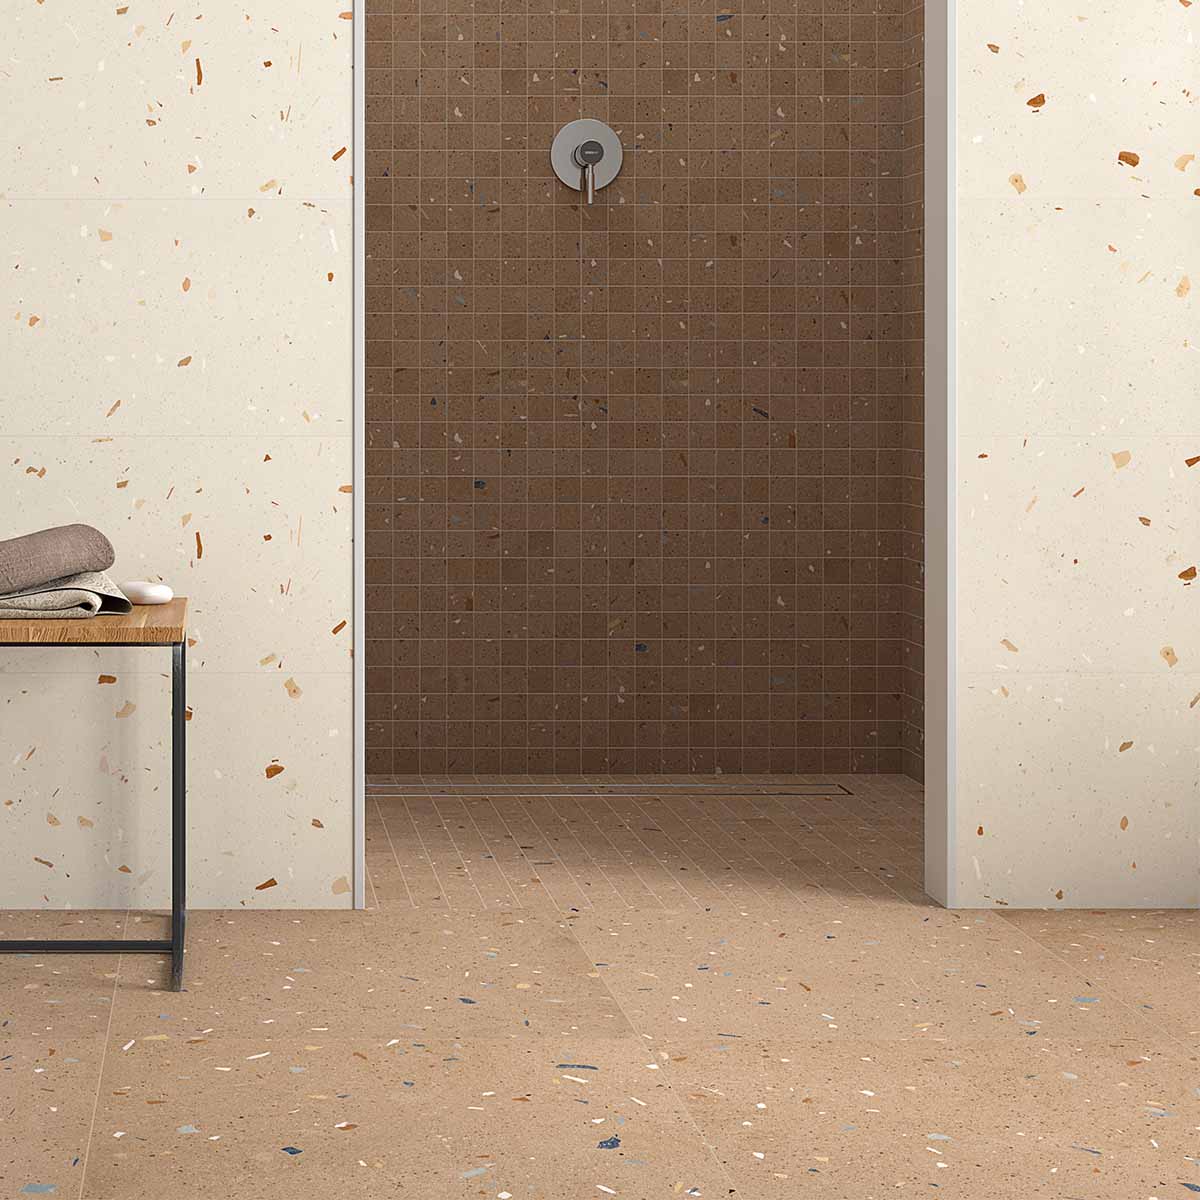 arcana croccante-r nuez terrazzo porcelain floor tile 80x80cm deluxe bathrooms ireland